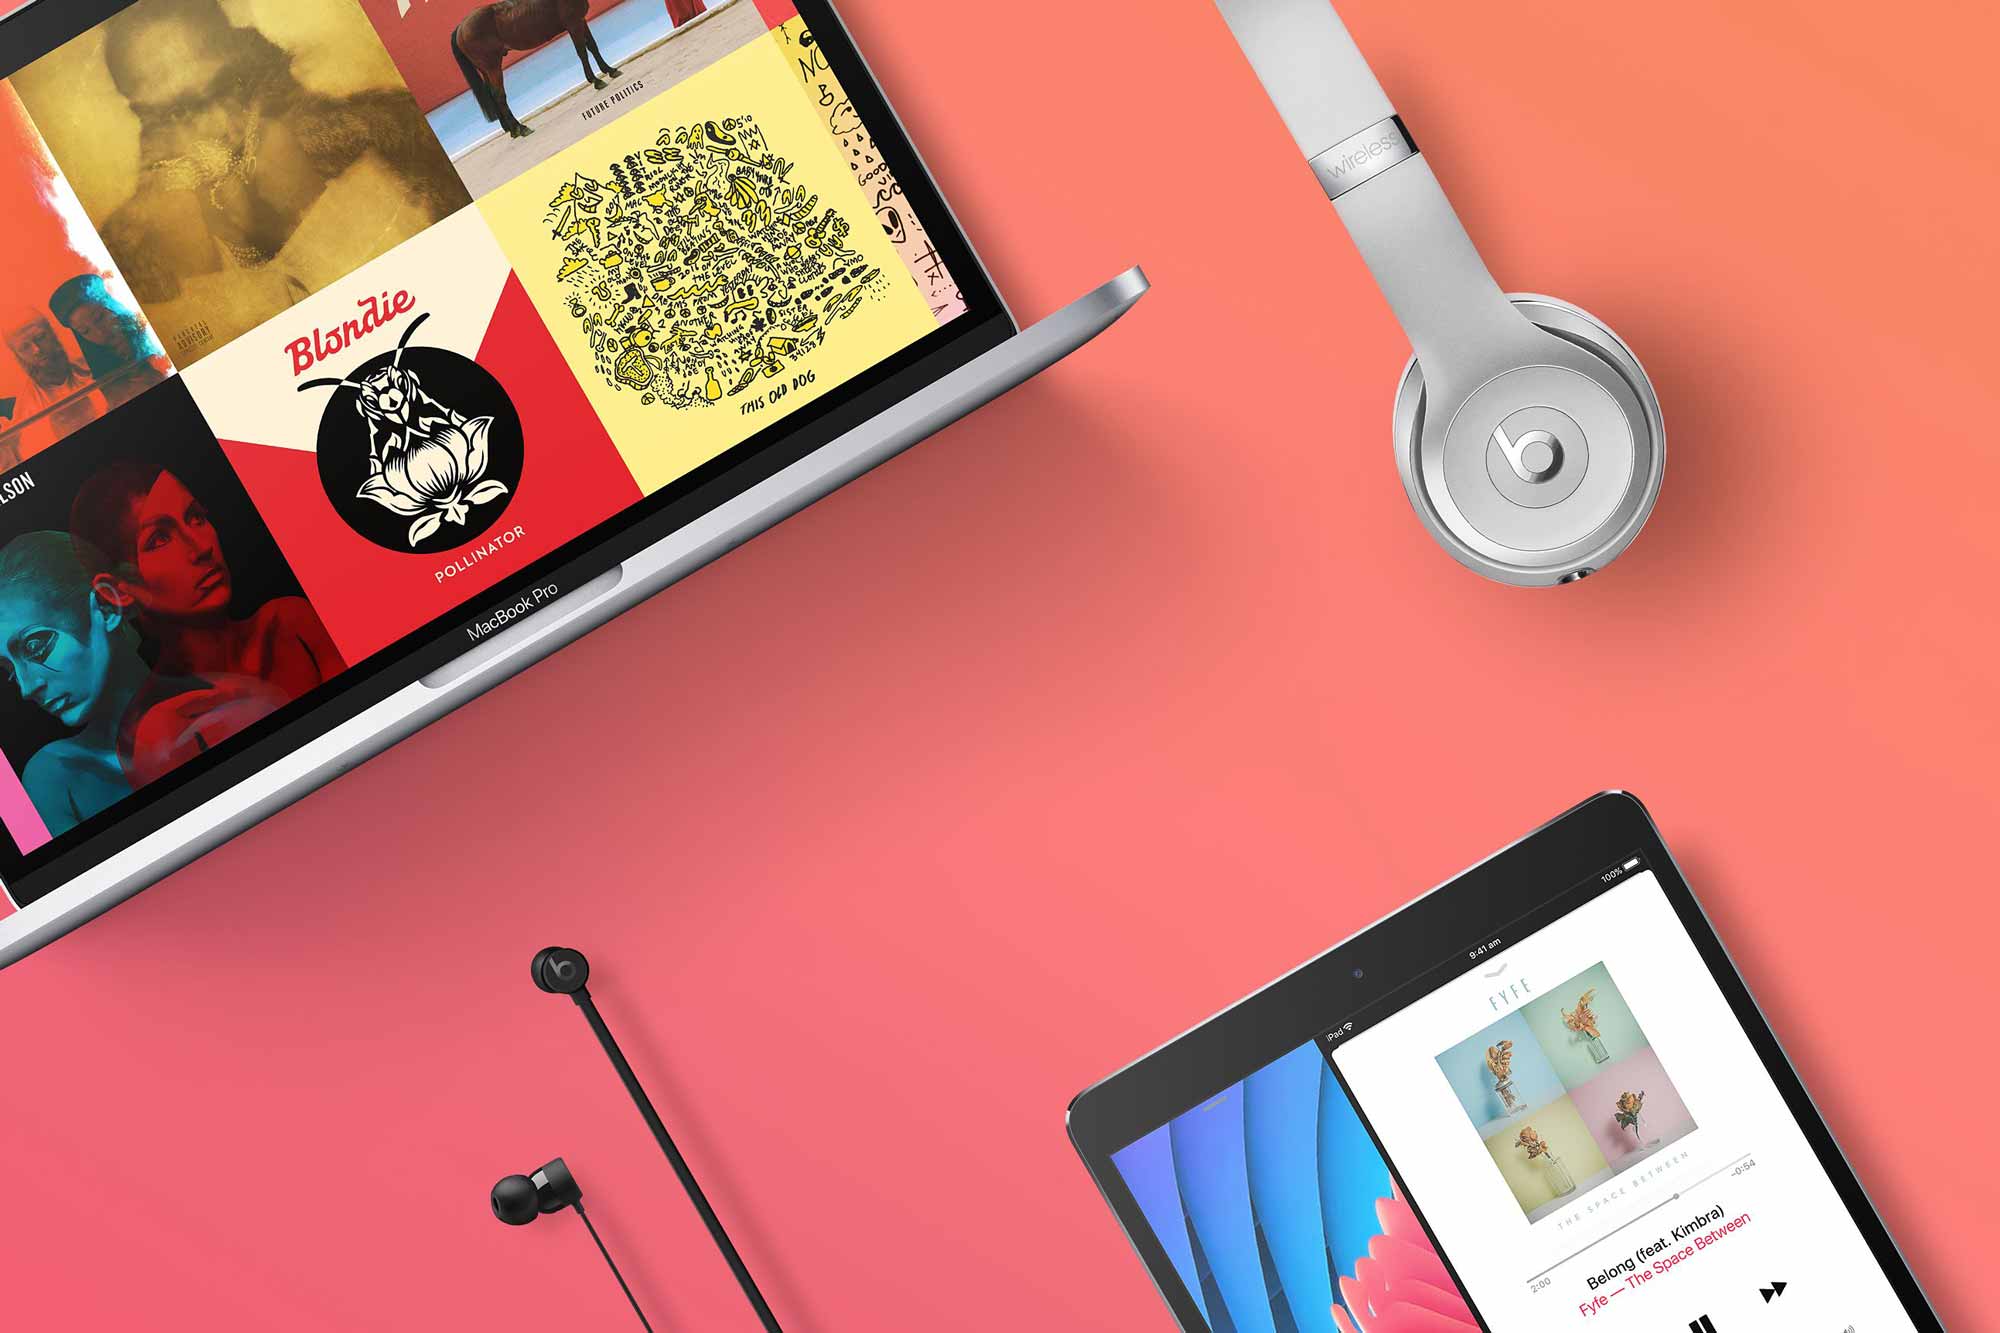 apple macbook pro with free beats